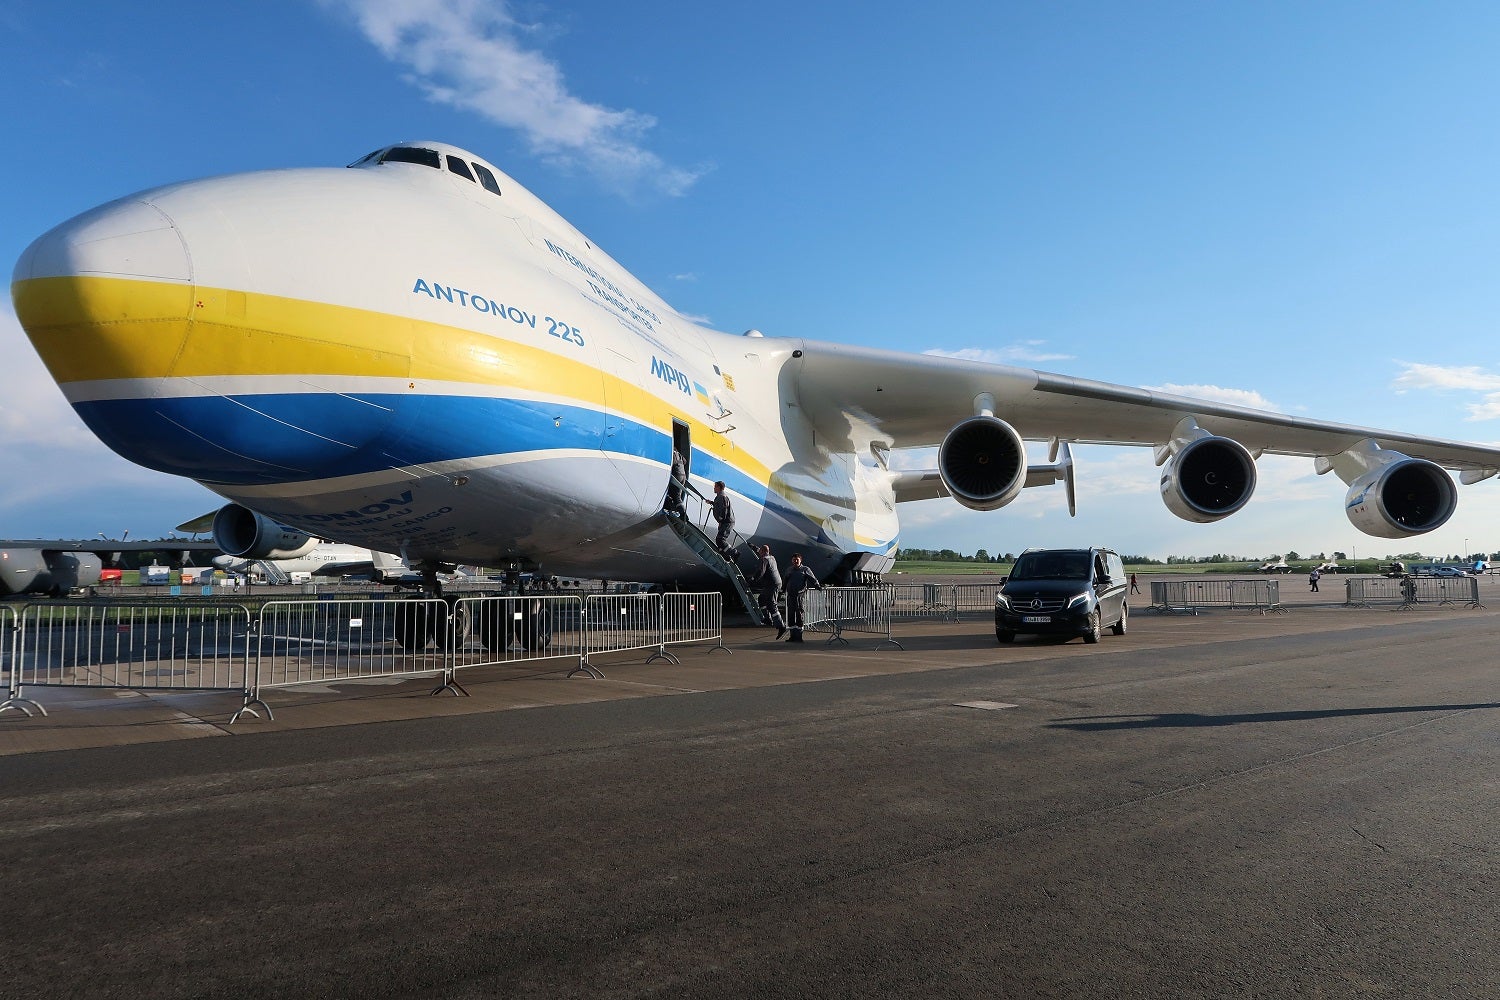 Antonov An-225 crew loading, nose, wing, three engines